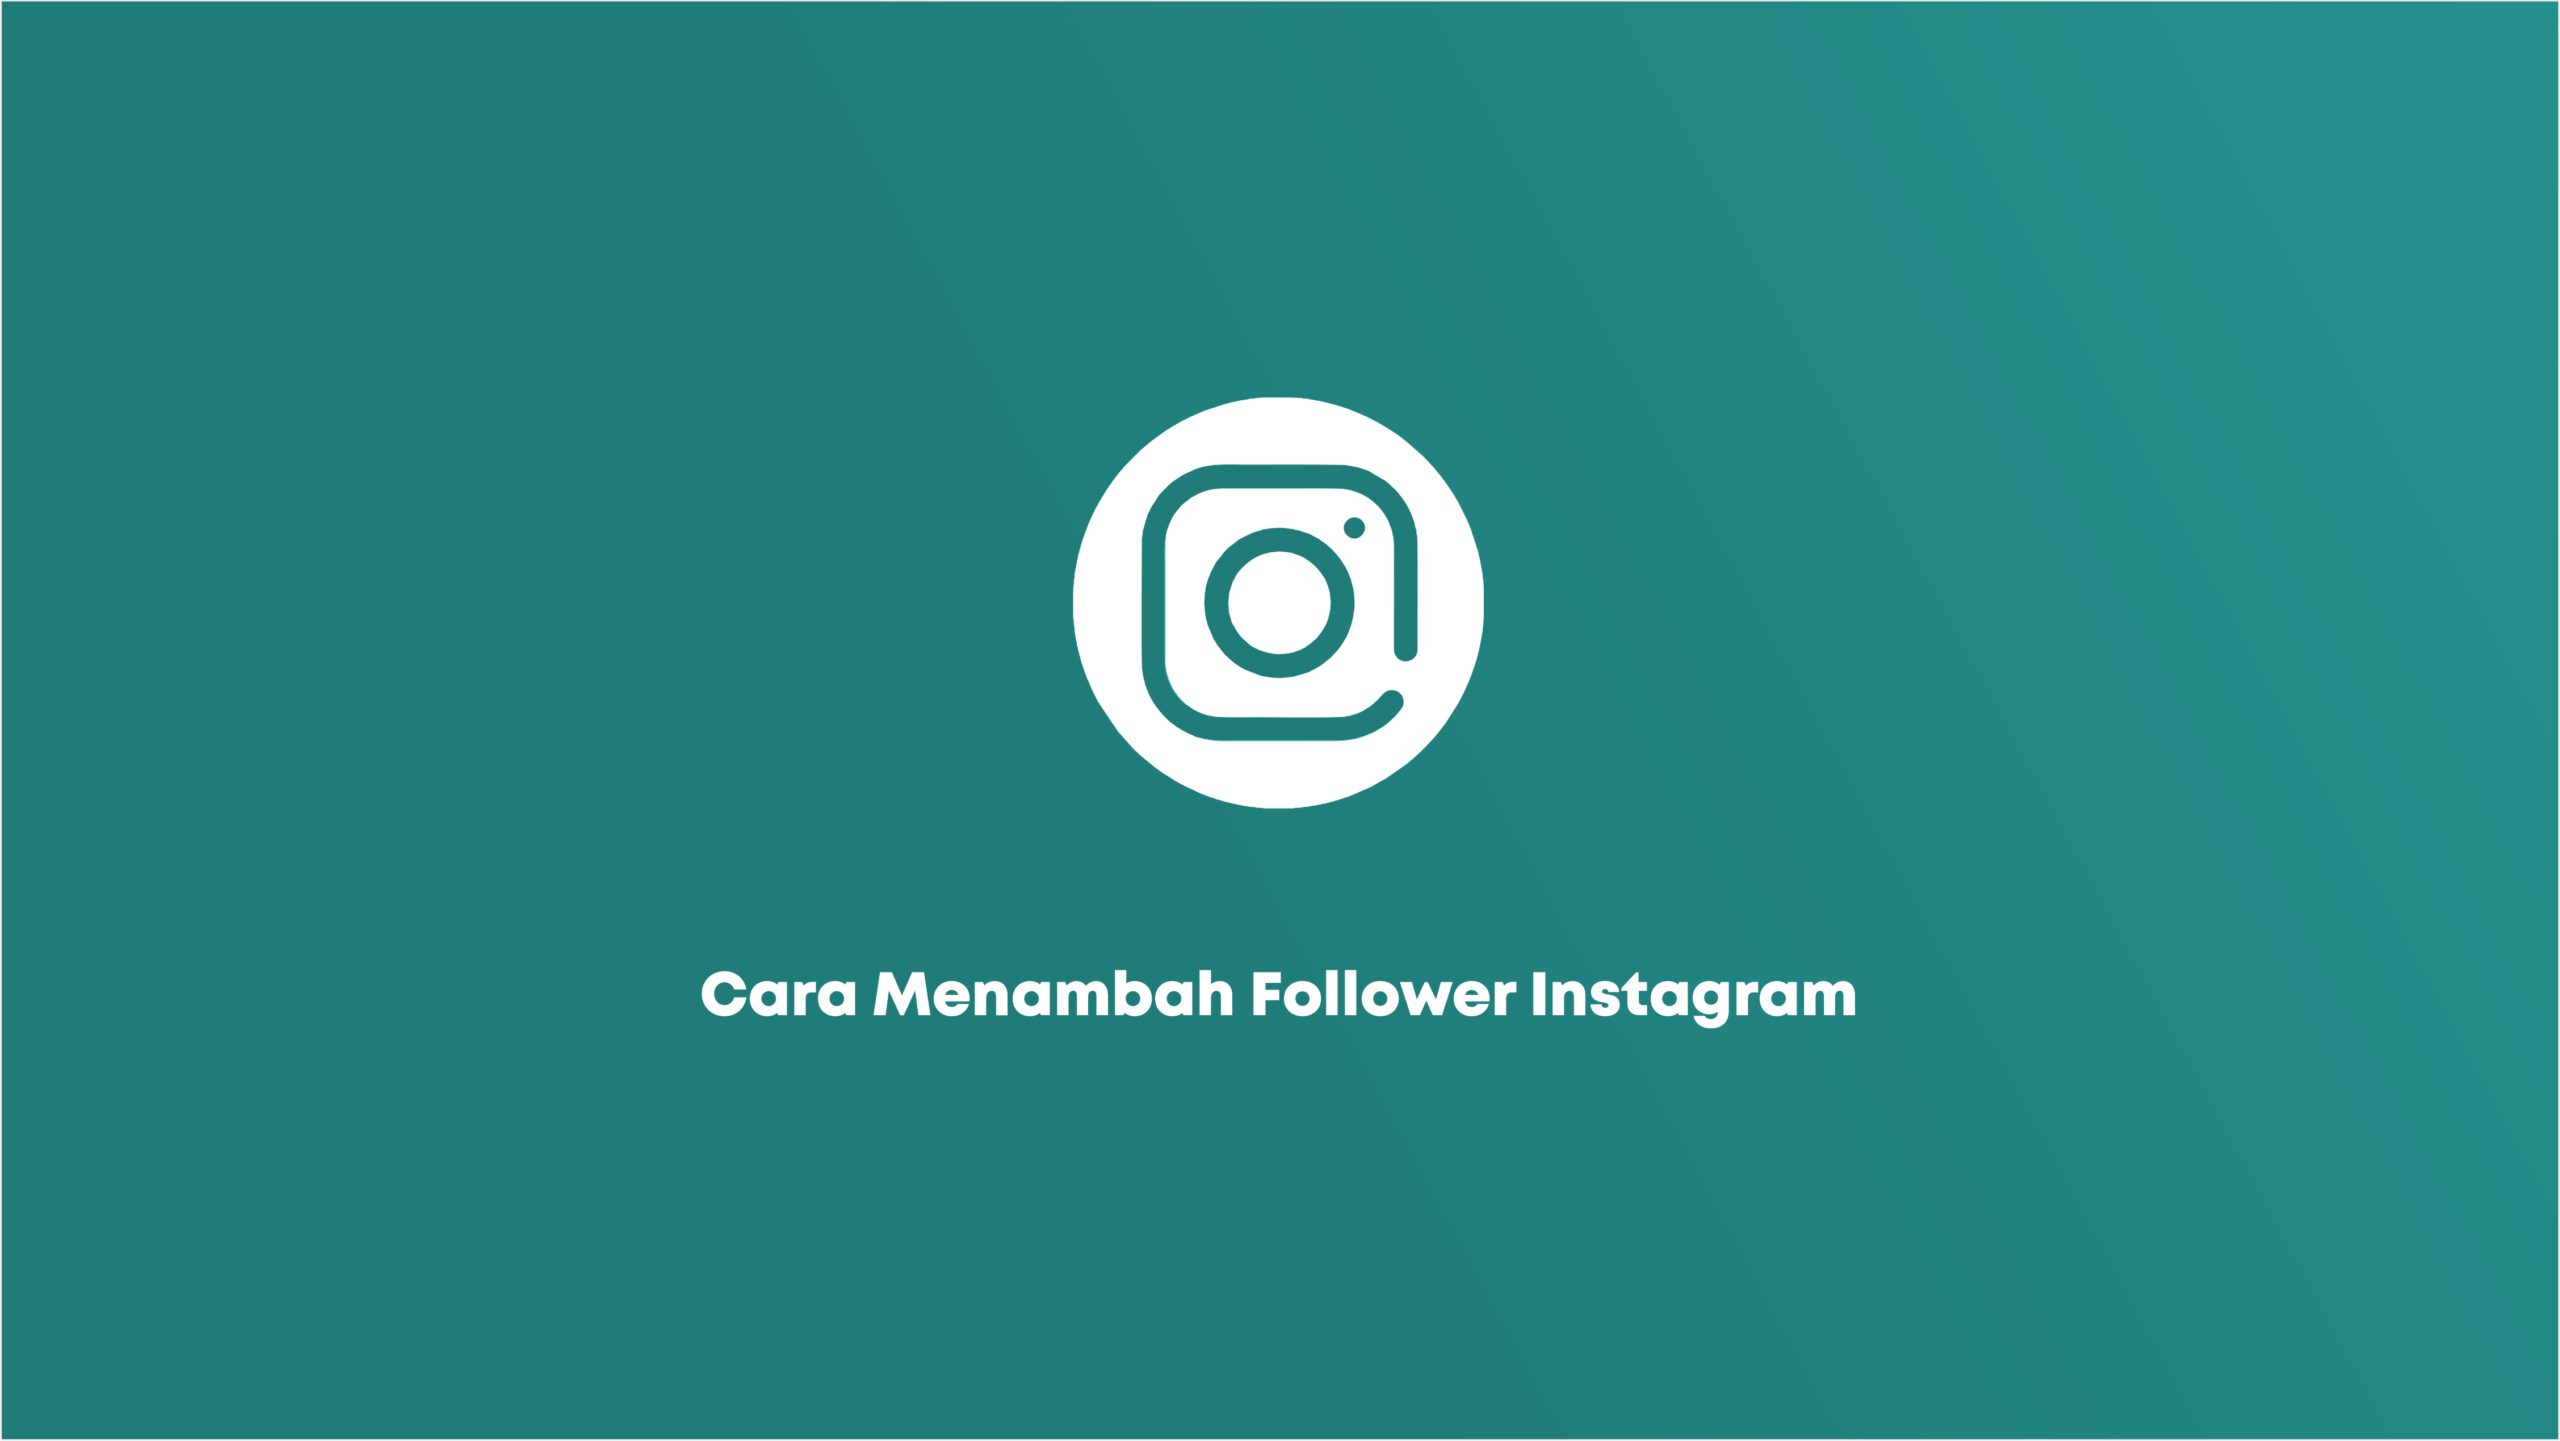 6 Cara Menambah Follower Instagram dengan Cepat Tanpa Beli